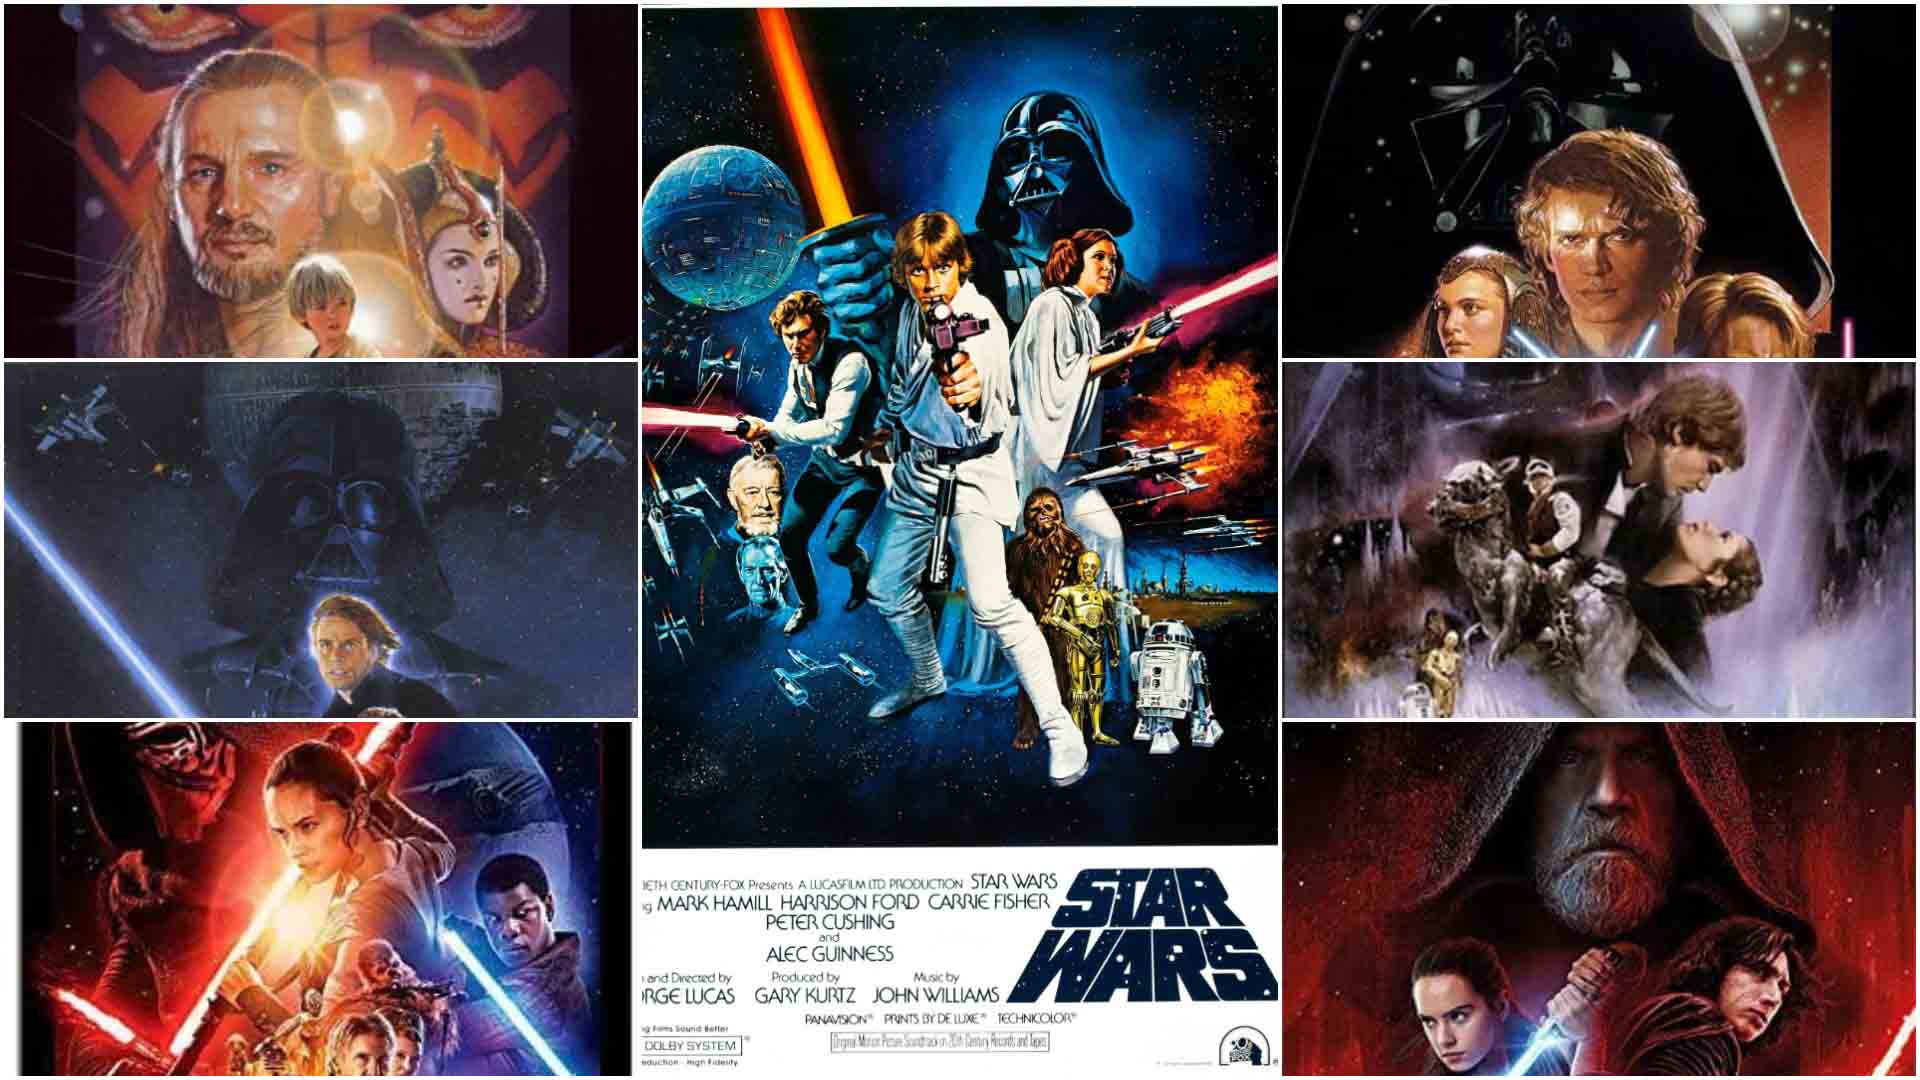 Star Wars timeline - how to watch Star Wars in order